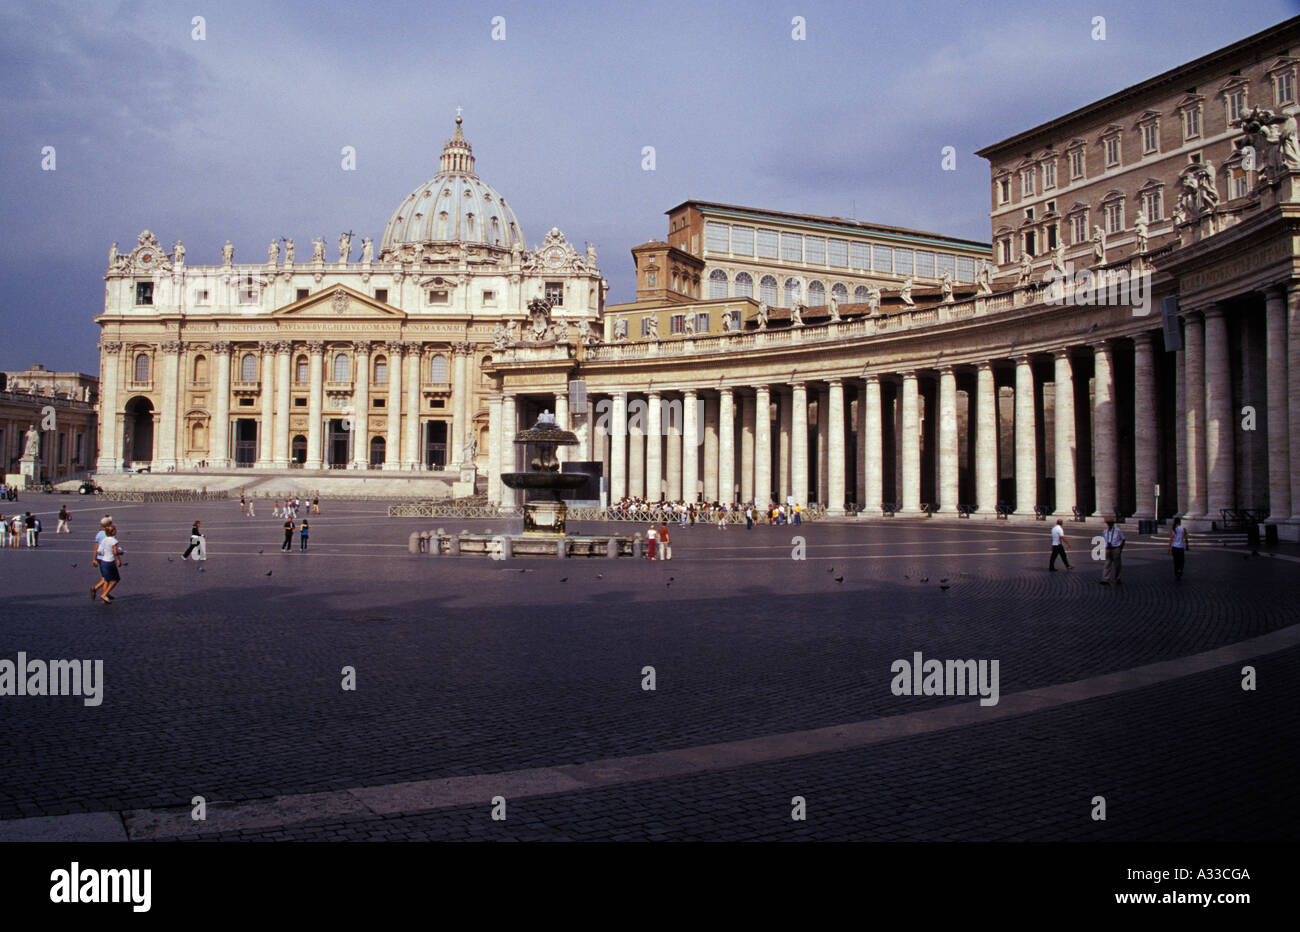 St Peter's Square, Piazza San Pietro, Rome, Italy Stock Photo